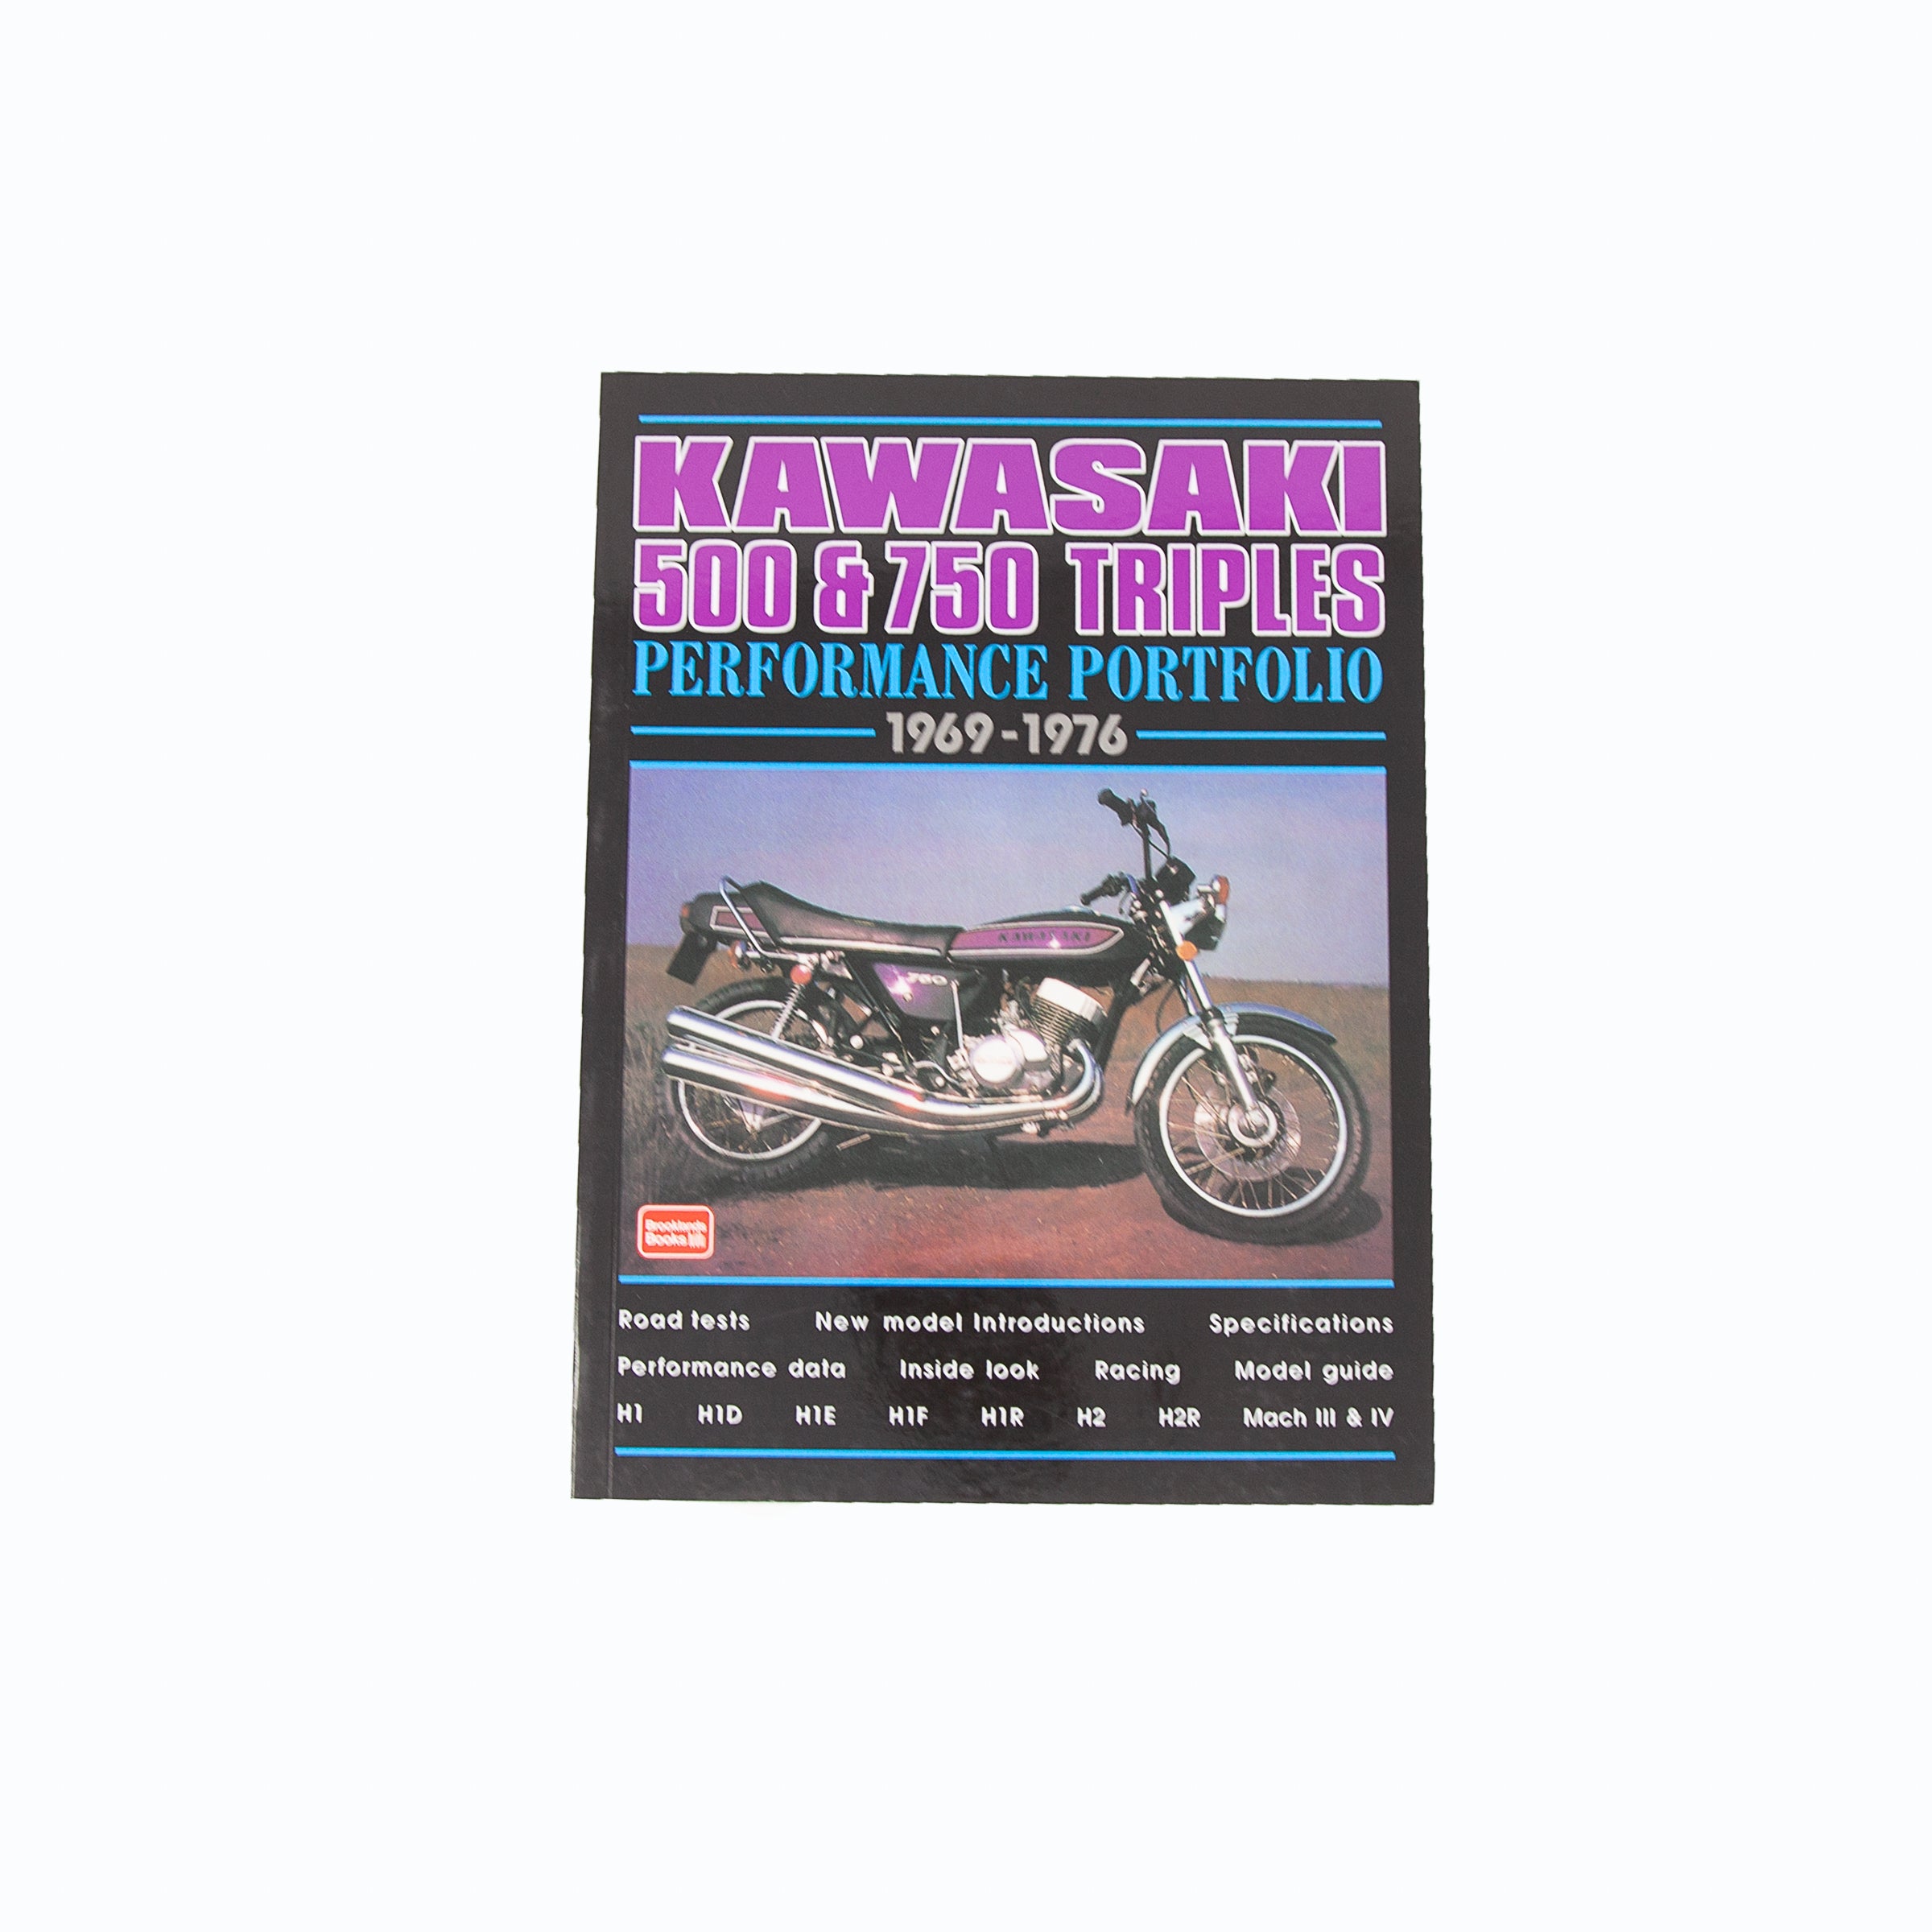 Dreamcycle Motorcycle Museum |  Kawasaki Preformance portfolio on white background, 